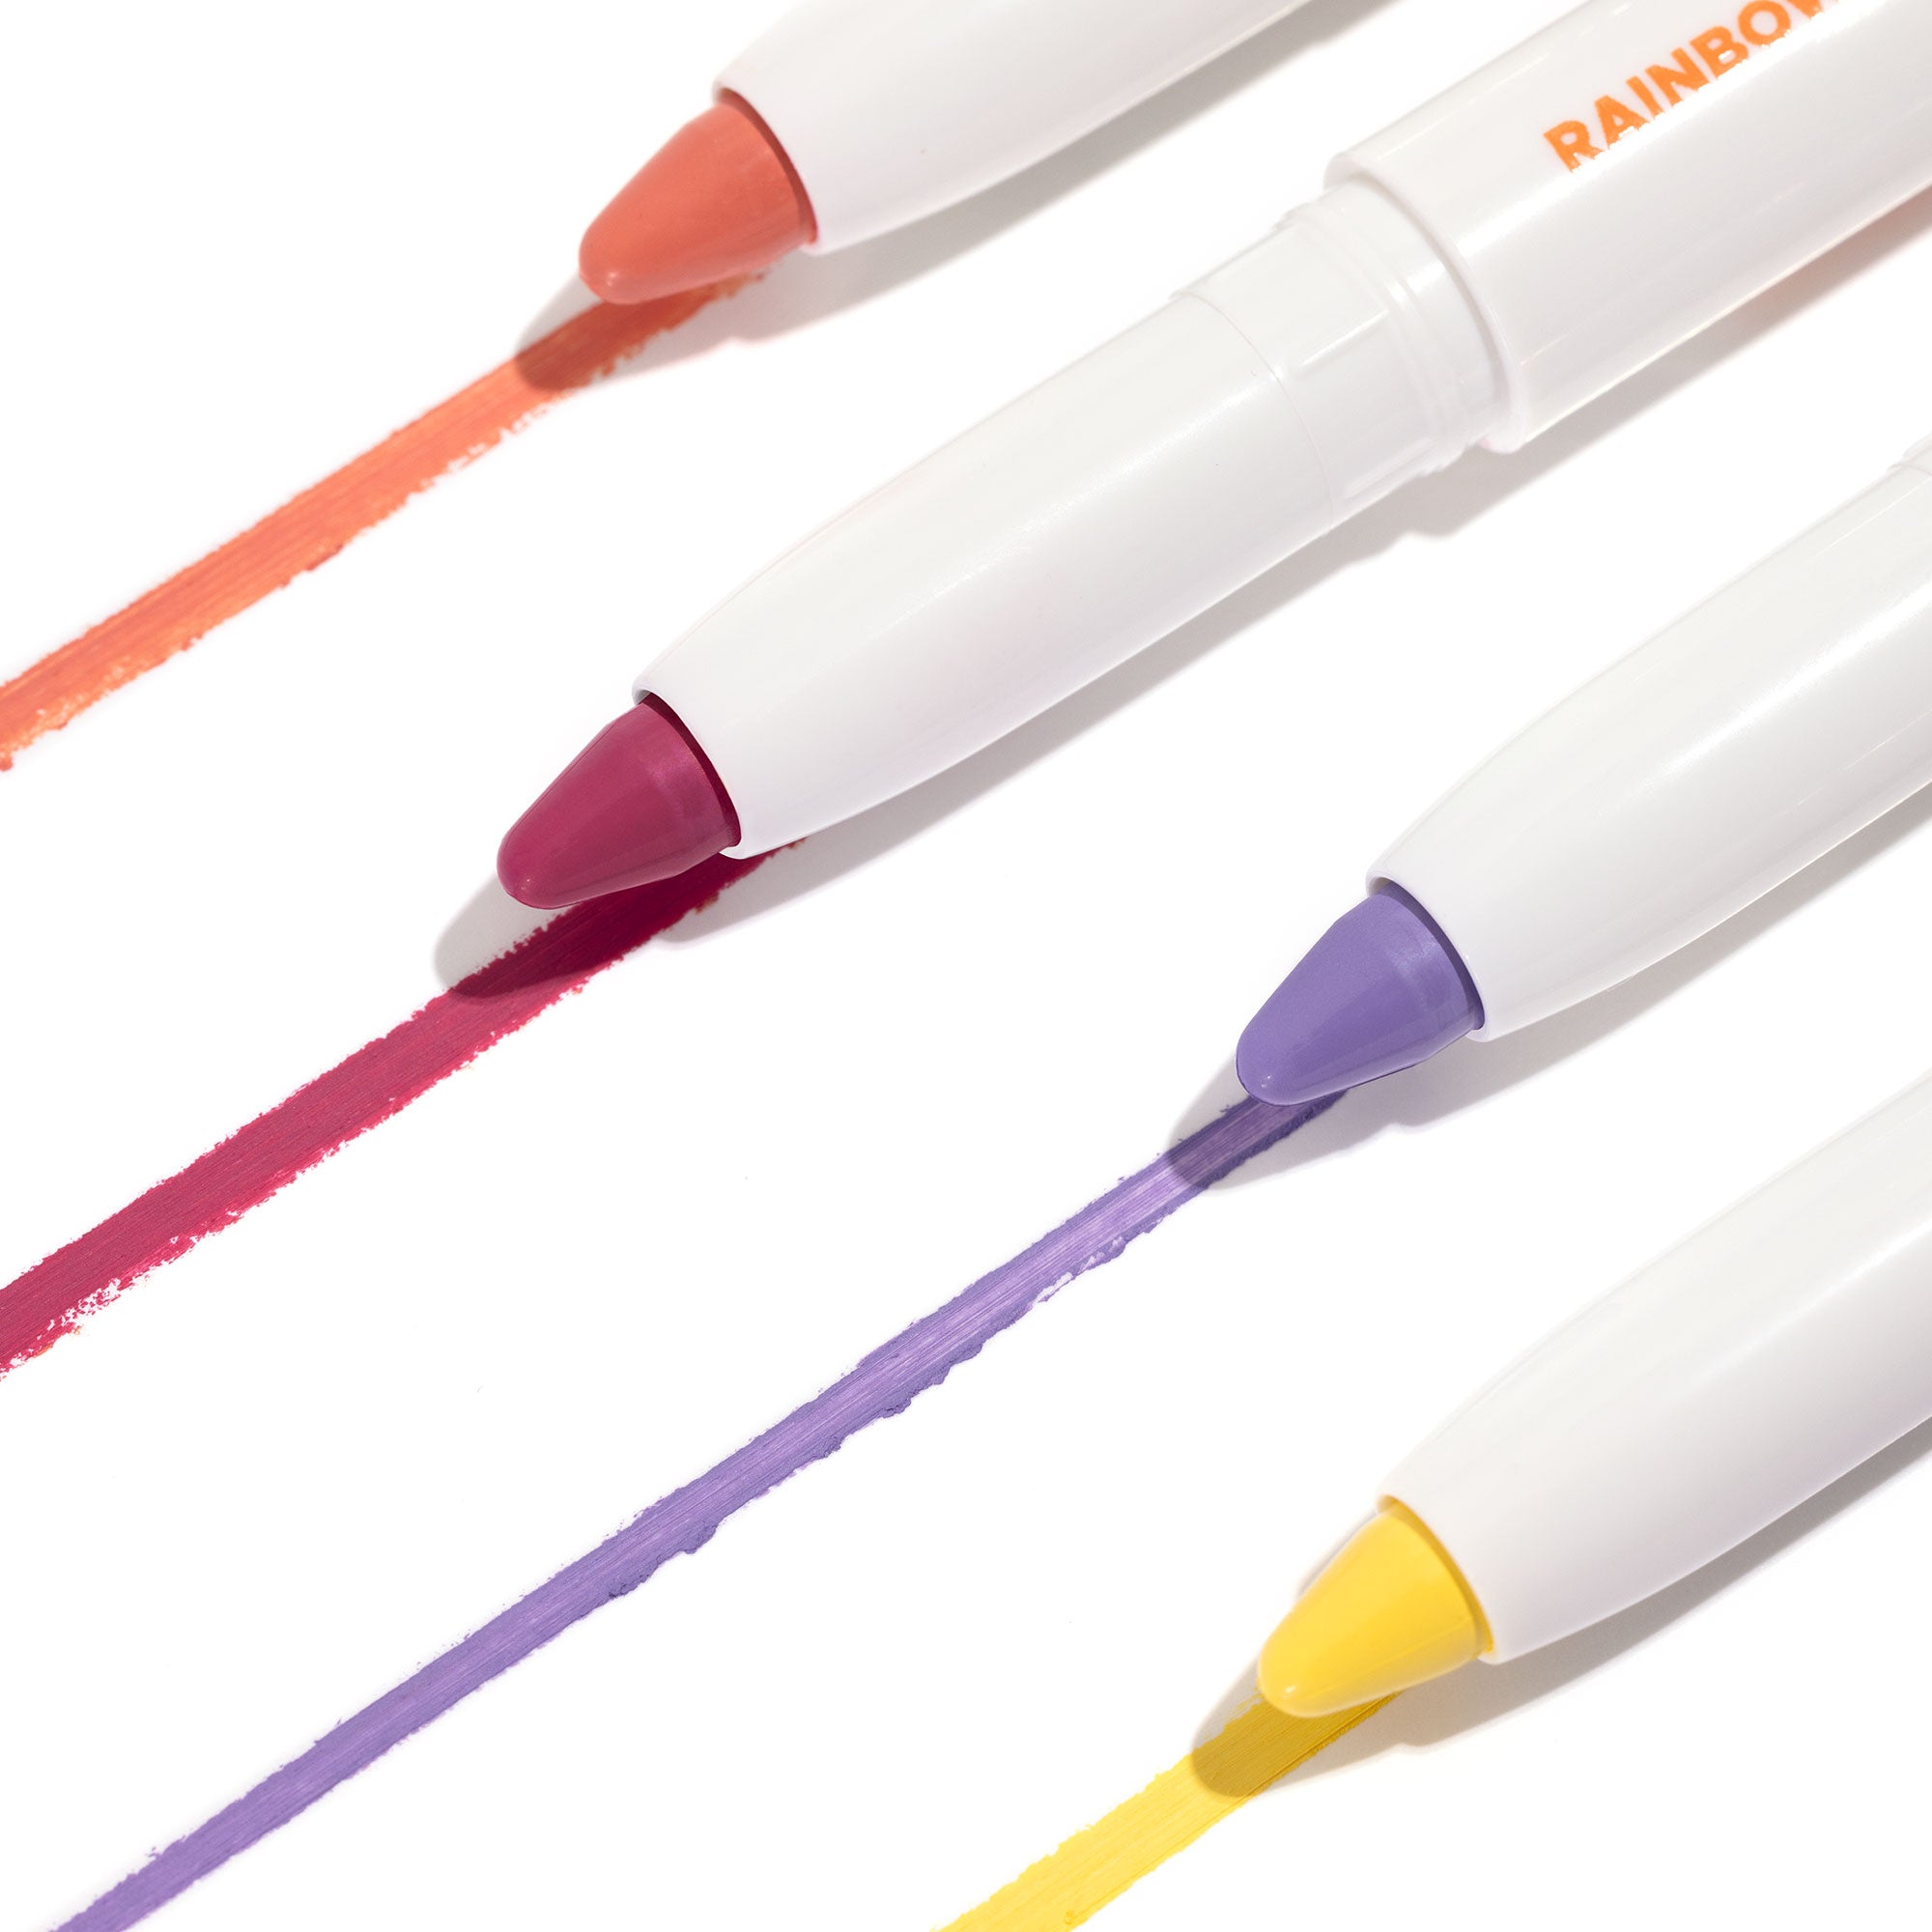 Rainbow Stick Eye Pencil - INGLOT Cosmetics